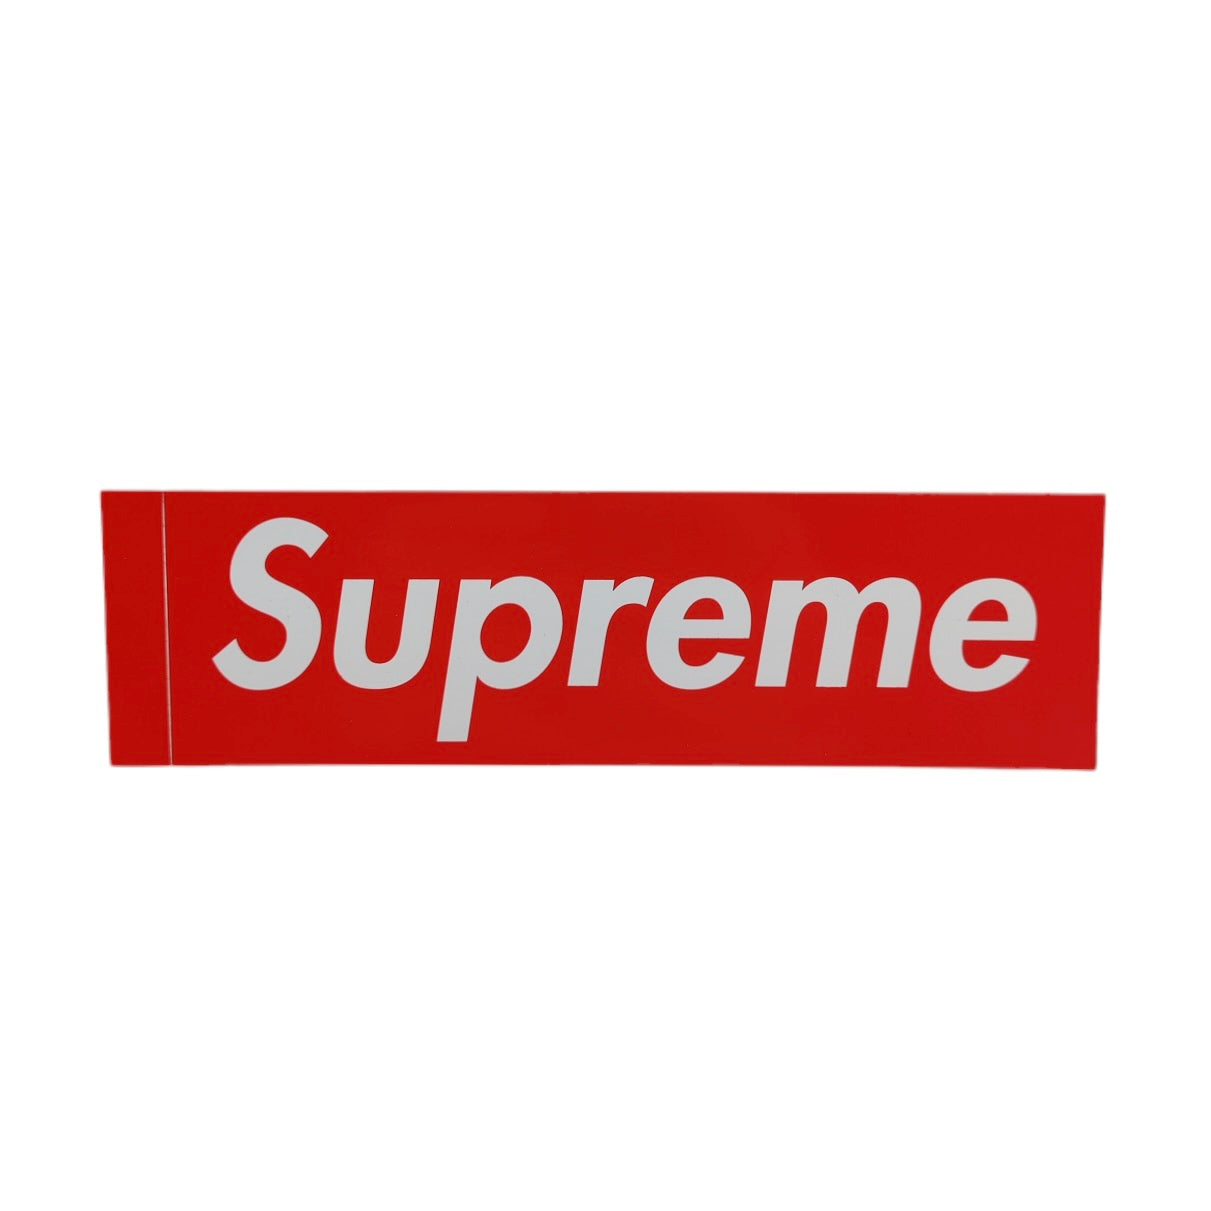 Supreme Box Logo Sticker